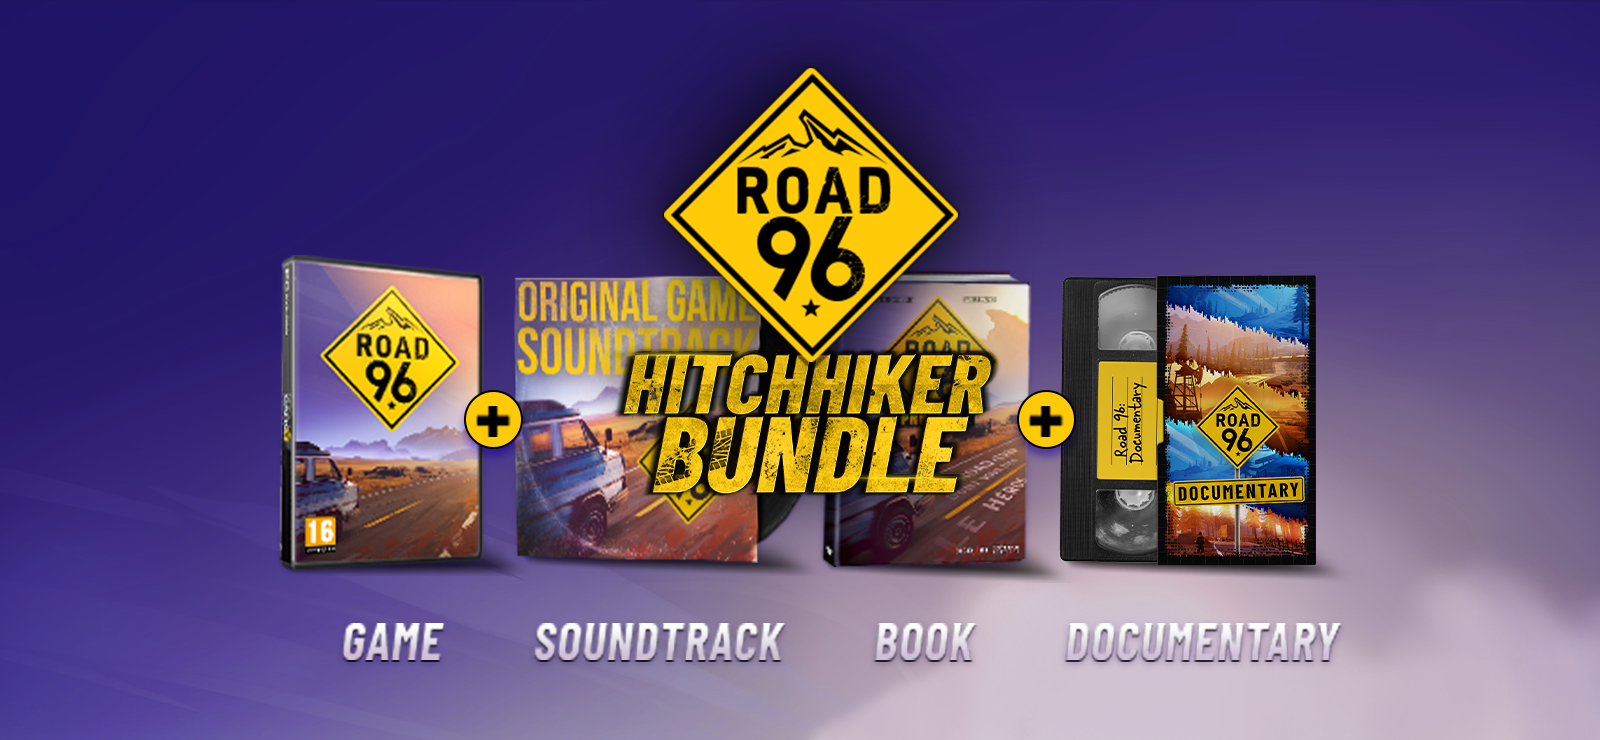 Road 96 - Hitchhiker Bundle